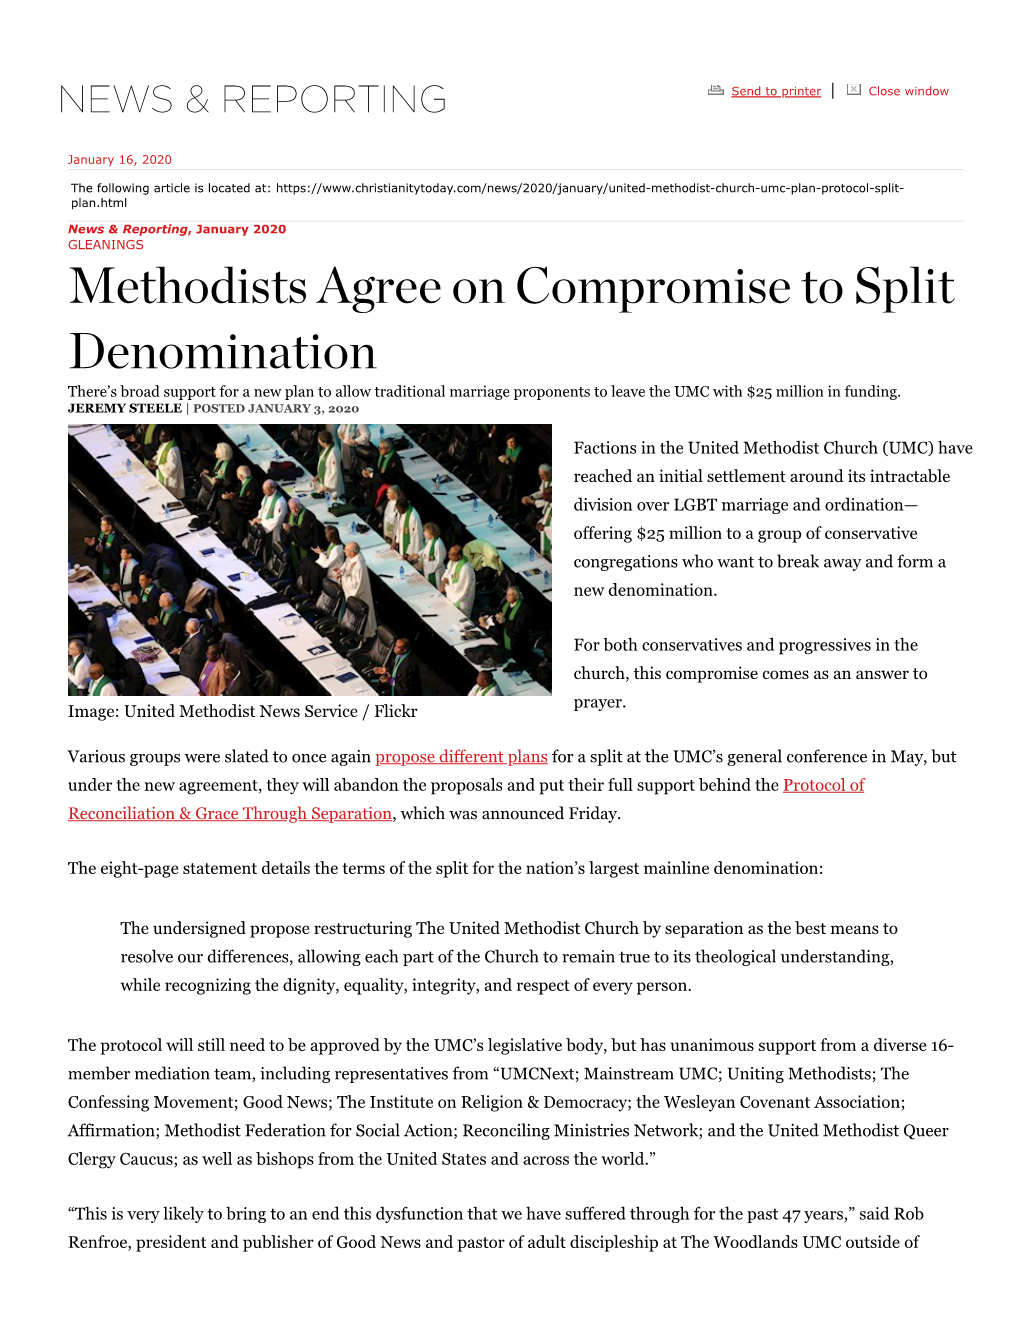 Methodistsagree on Compromise to Split Denomination